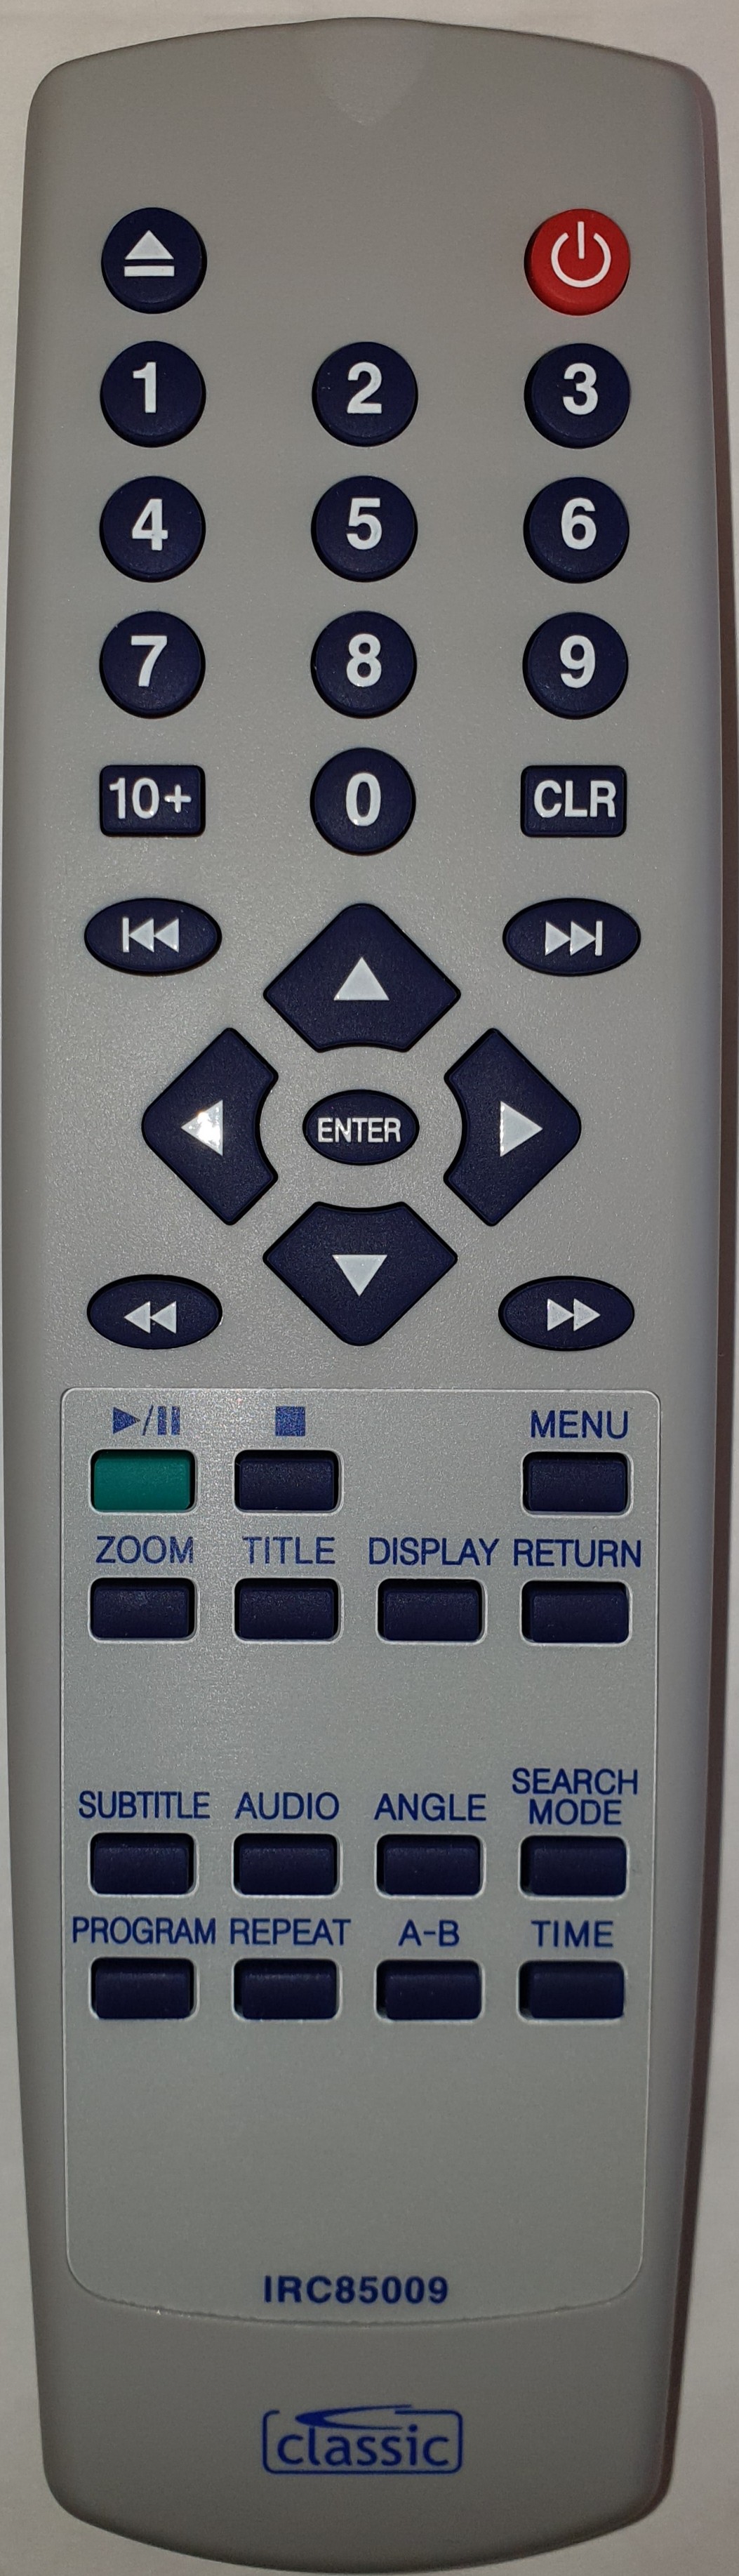 WHARFEDALE DVD3210DHDMI Remote Control